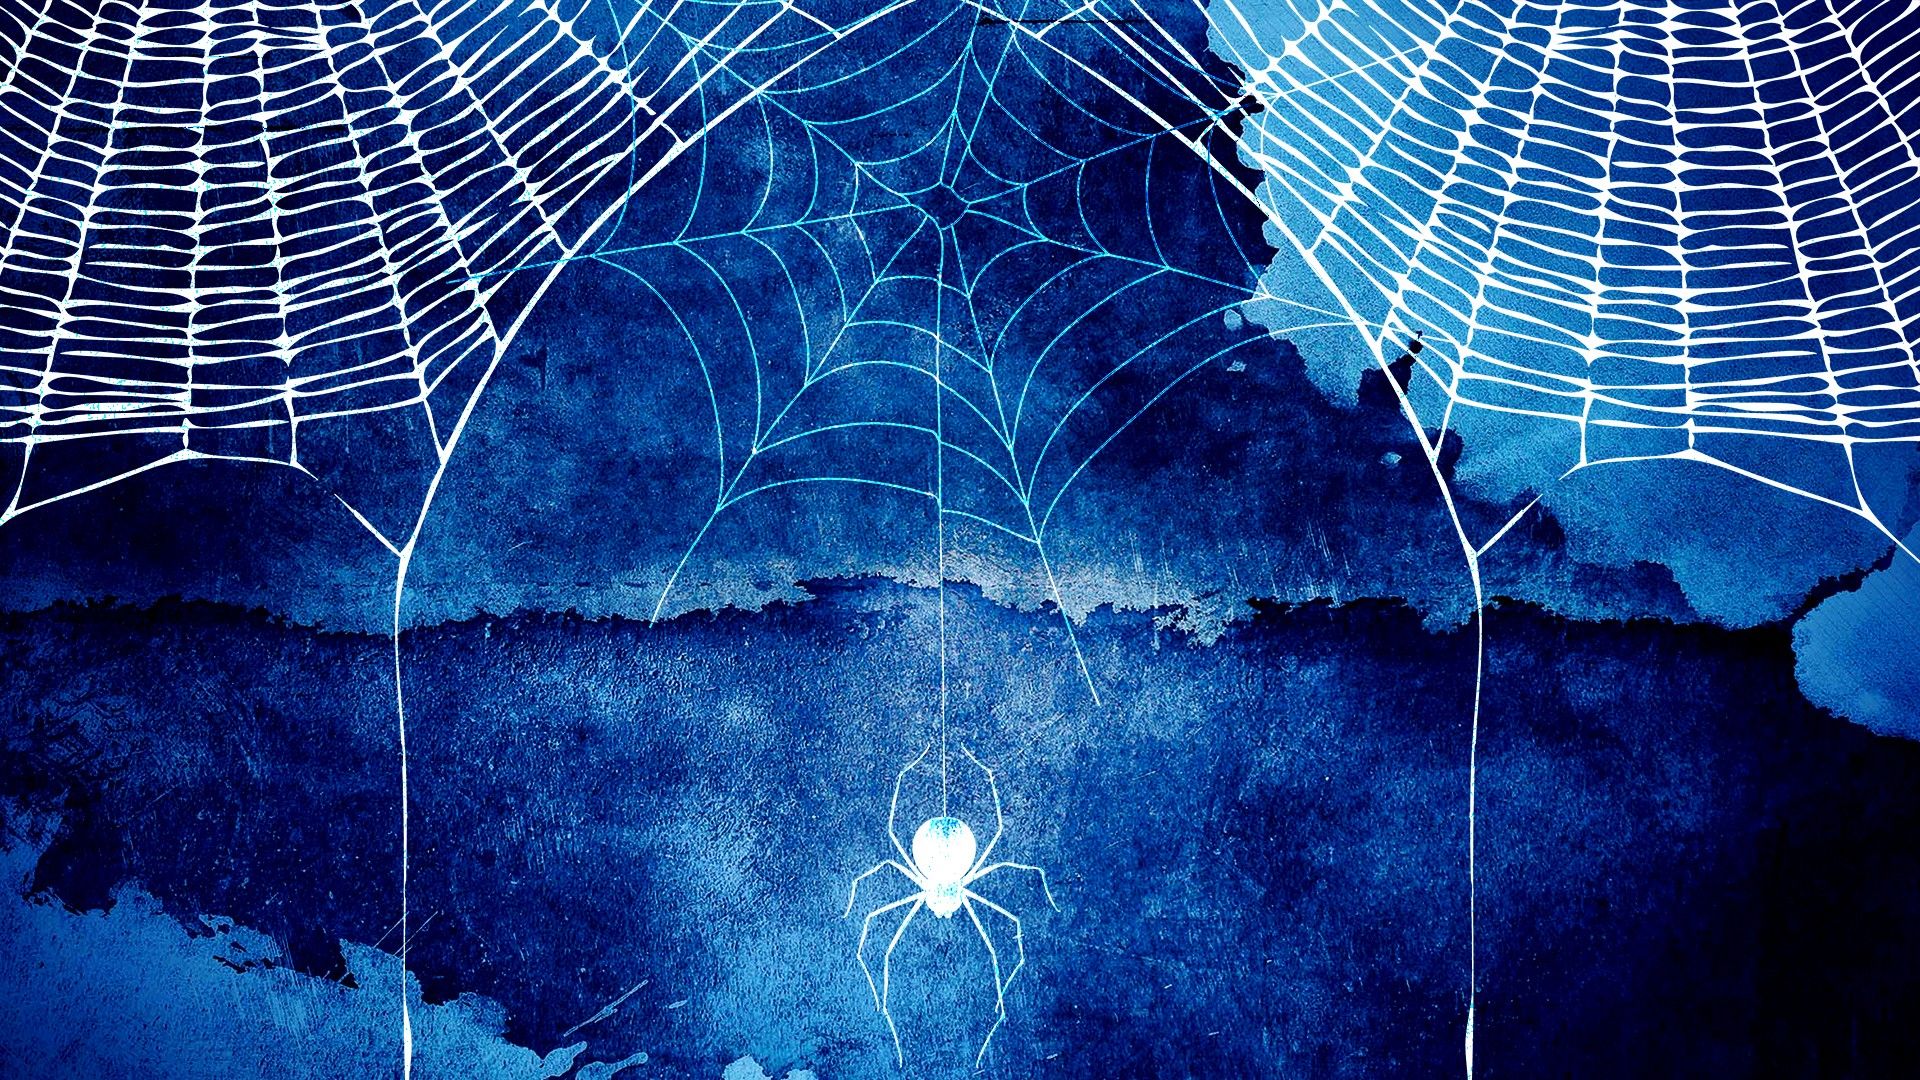 spider web wallpaper hd